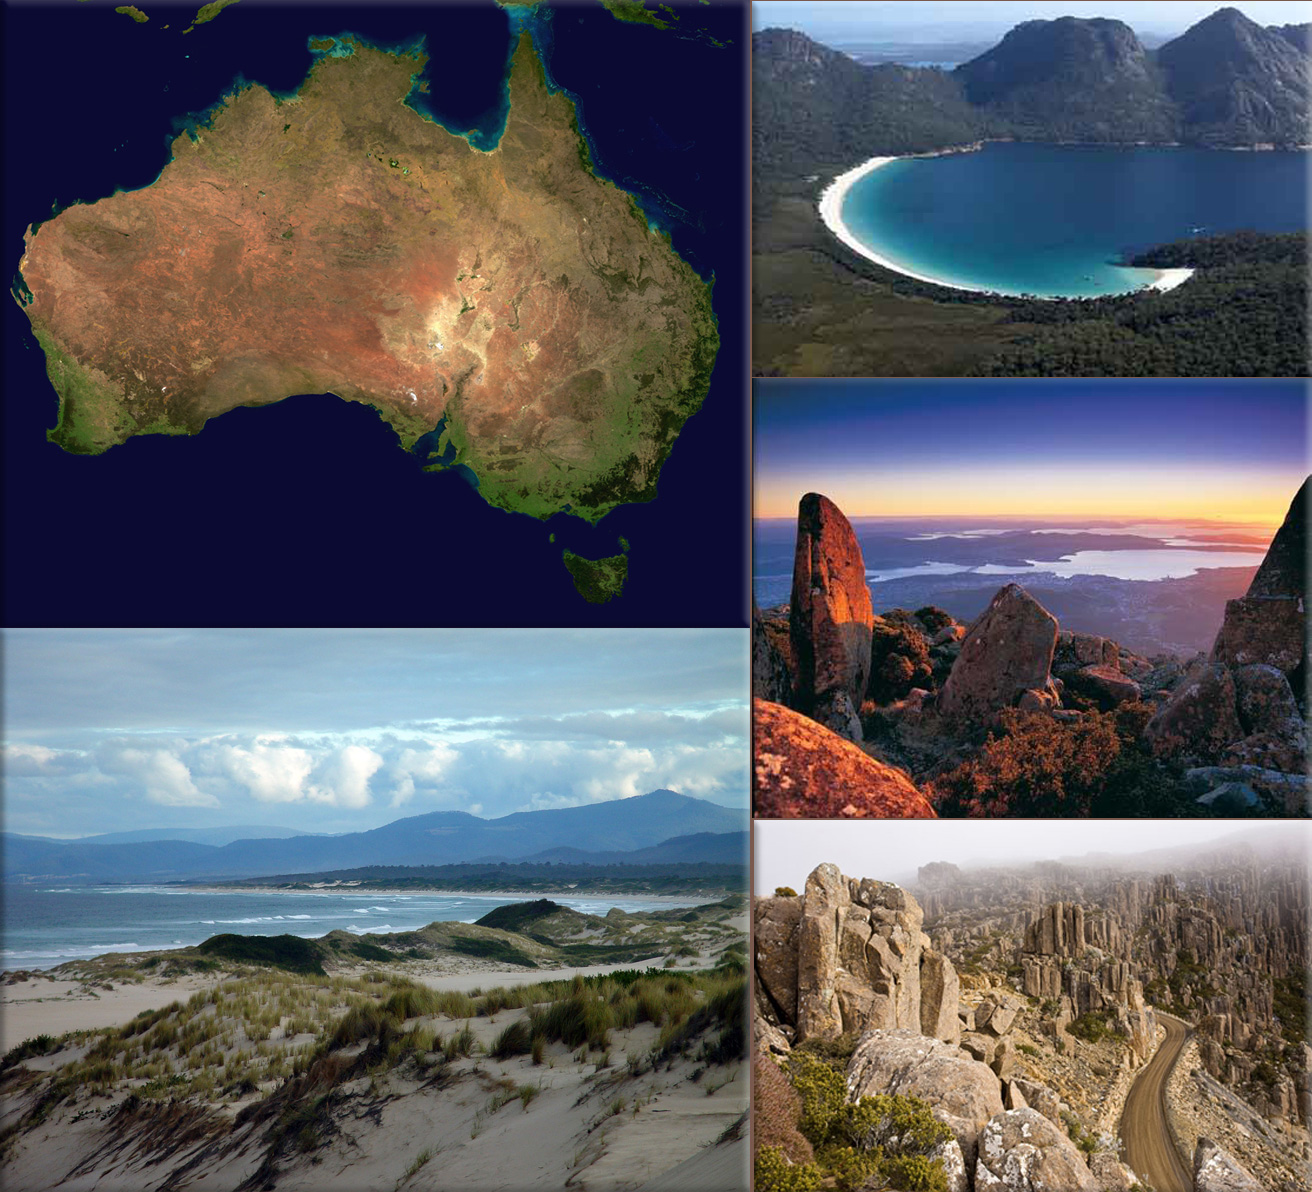 Tasmania Collage: Van Diemen's Land was the original name used by most Europeans for the island of Tasmania, now part of Australia